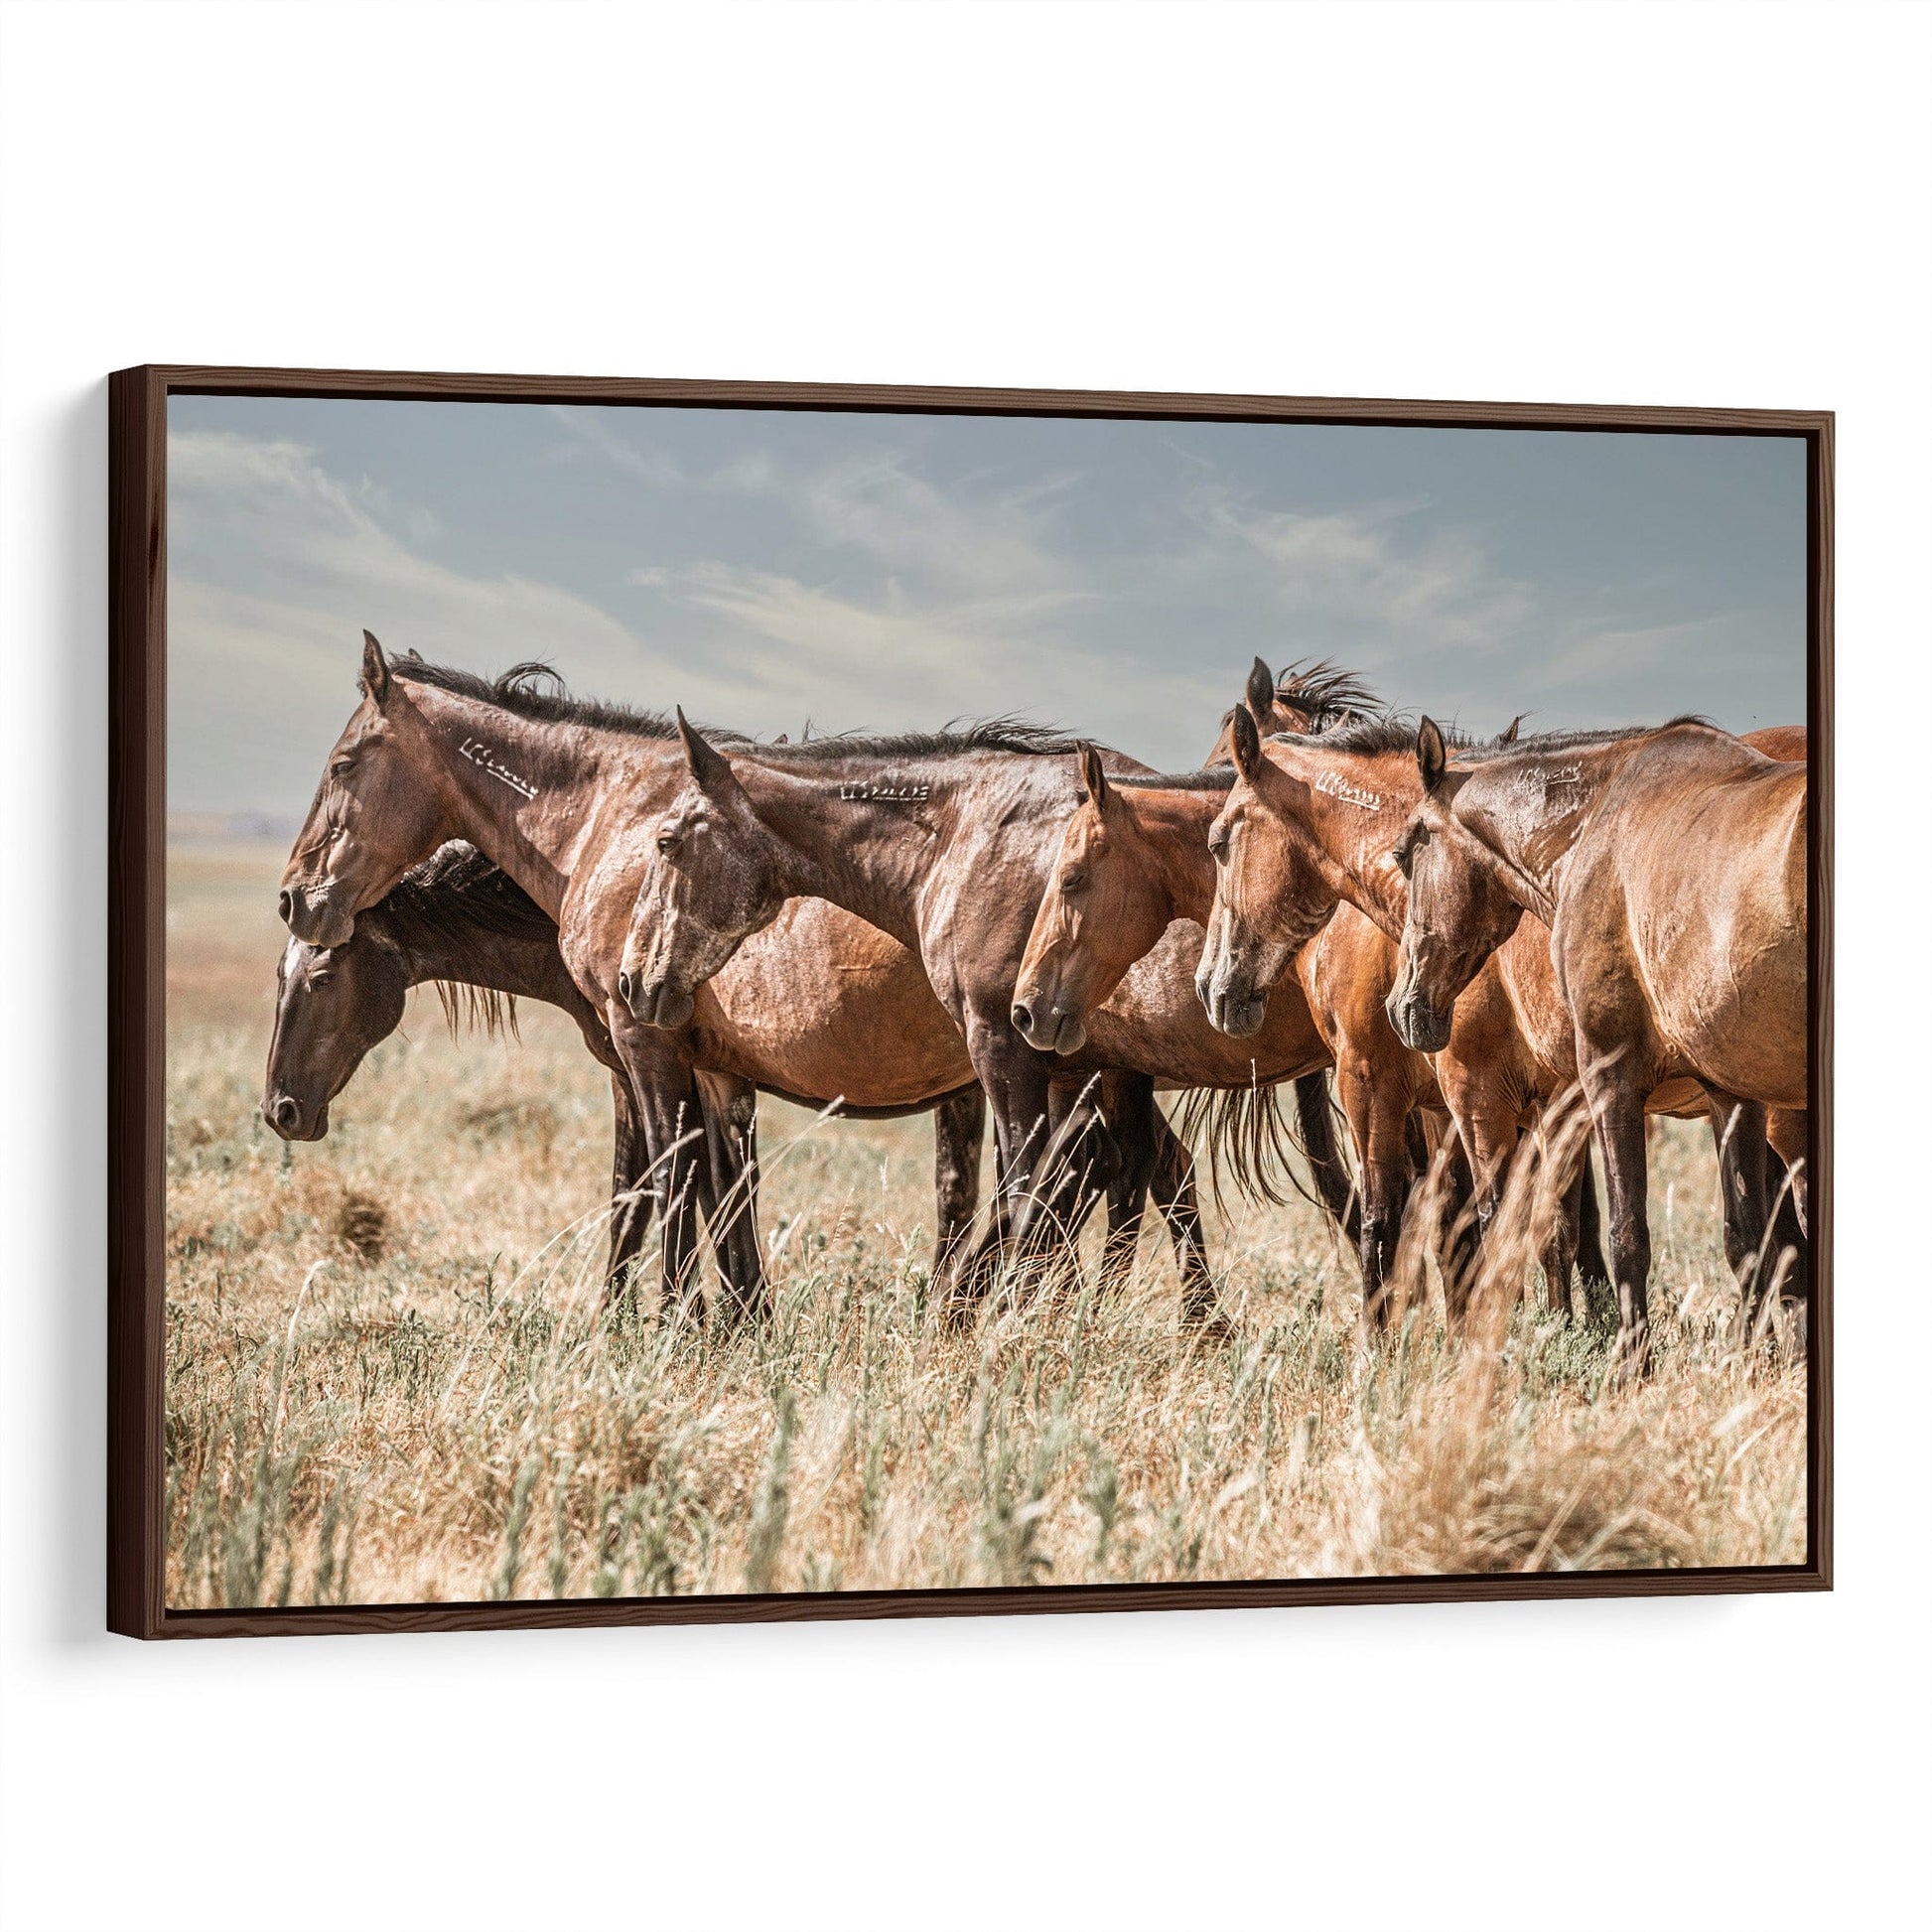 Wild Horses Canvas Print - Western Wall Decor Canvas-Walnut Frame / 12 x 18 Inches Wall Art Teri James Photography